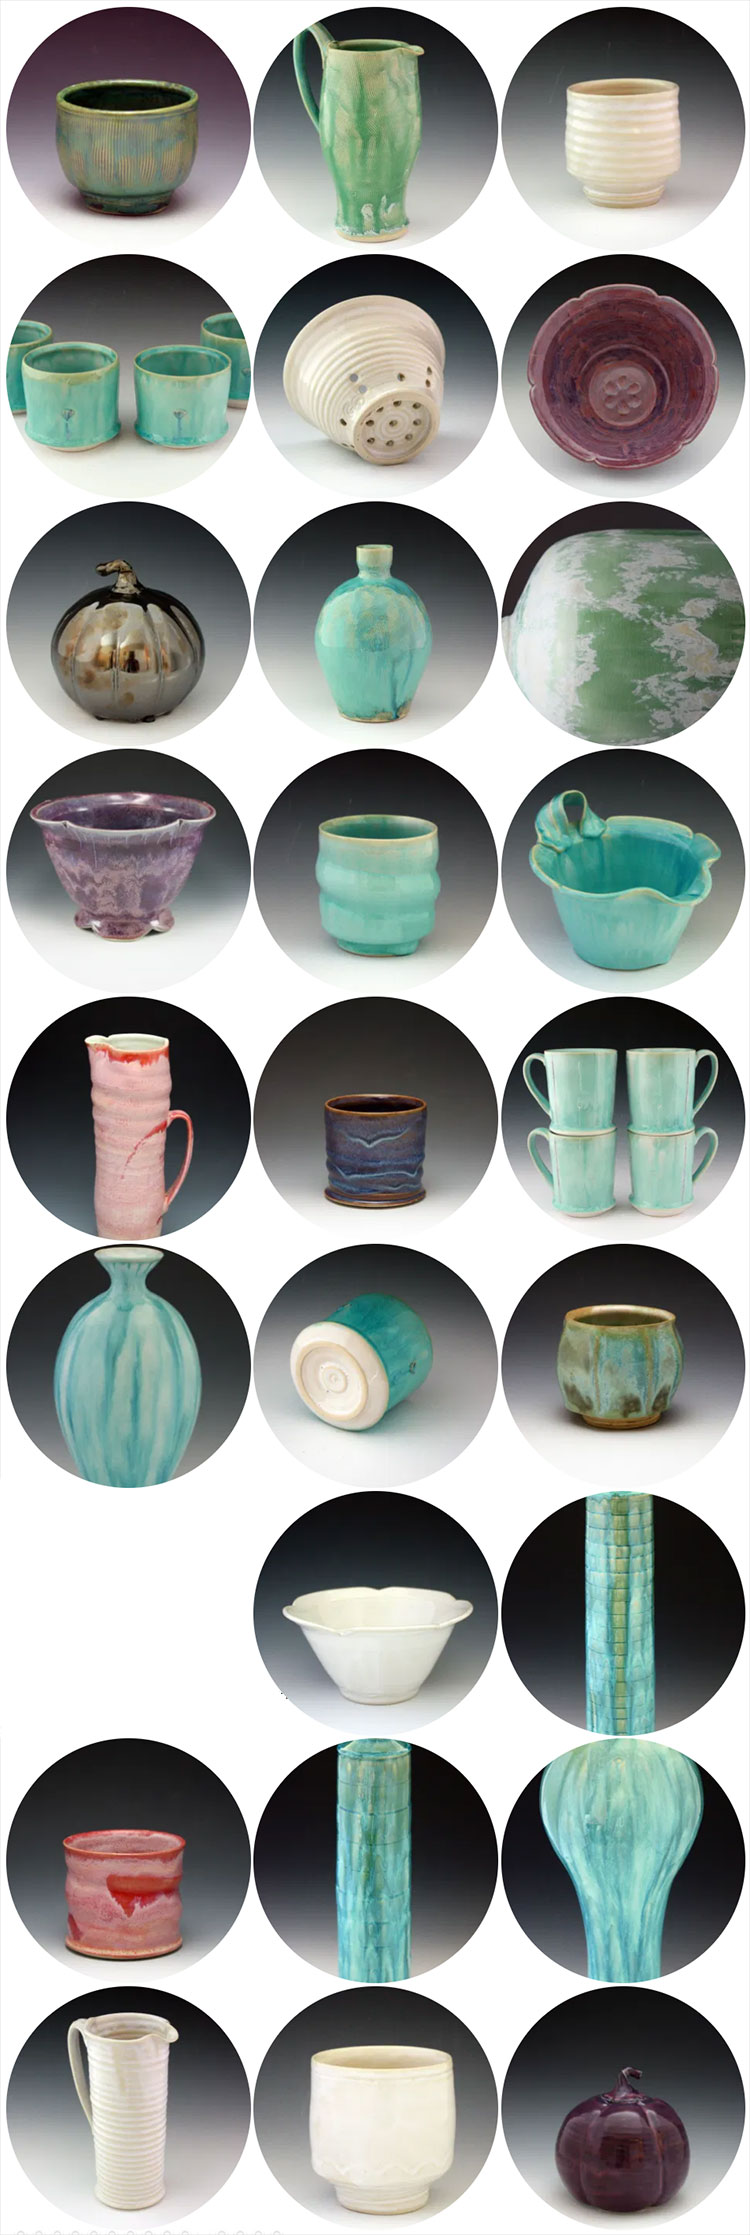 My Ceramic Gallery